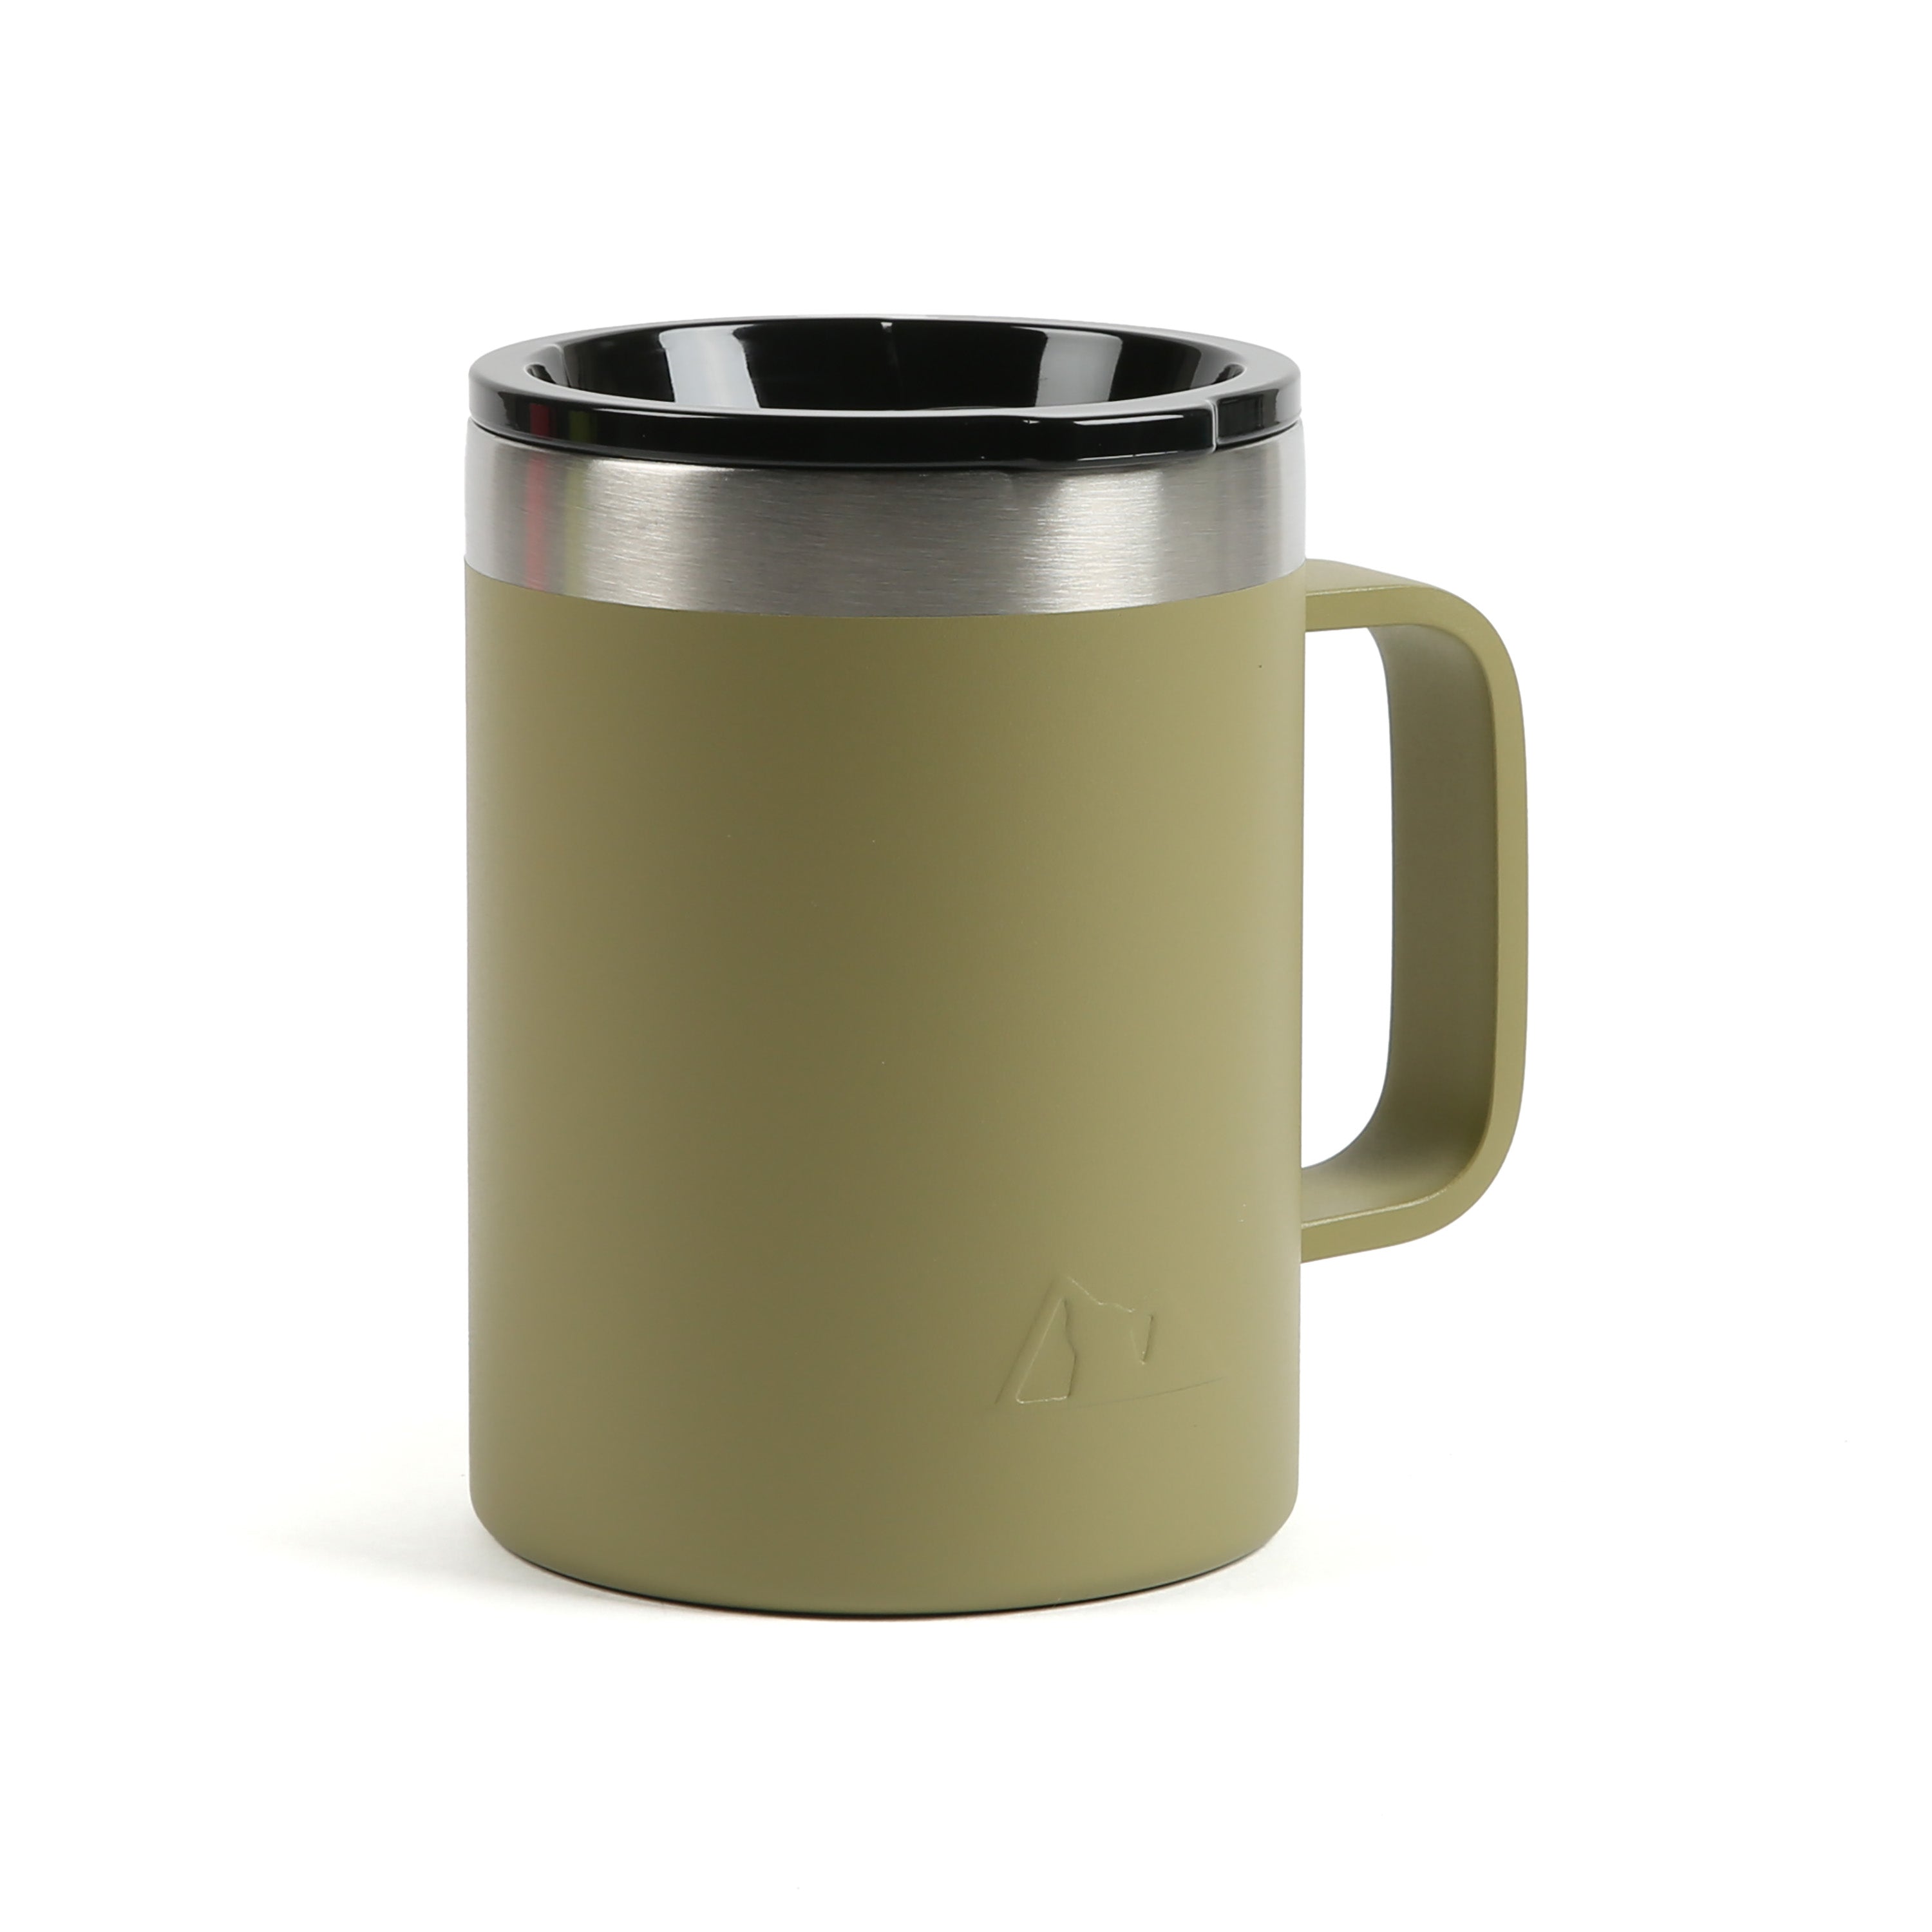 14 Oz. Stainless Steel Mug With Microban? Infused Lid*